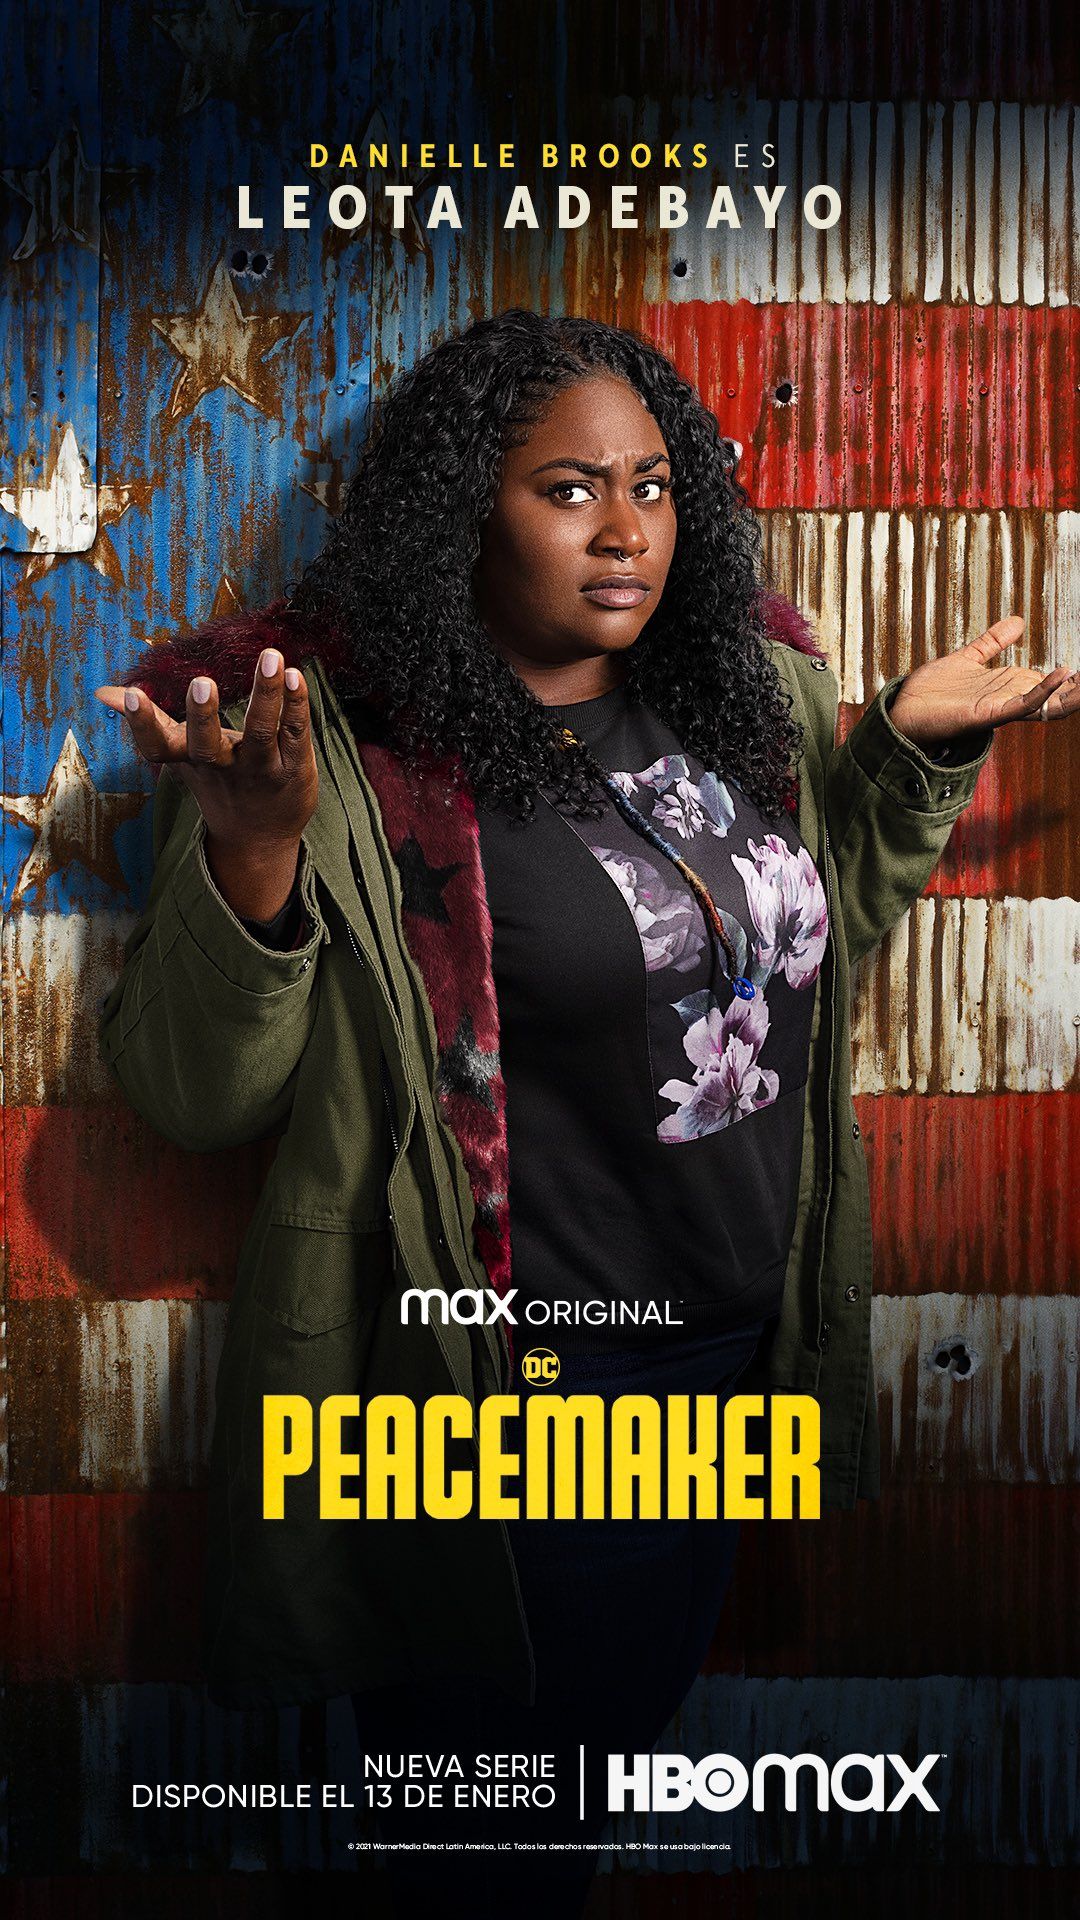 Peacemaker Character Posters Highlight John Cena & His Superhero Team